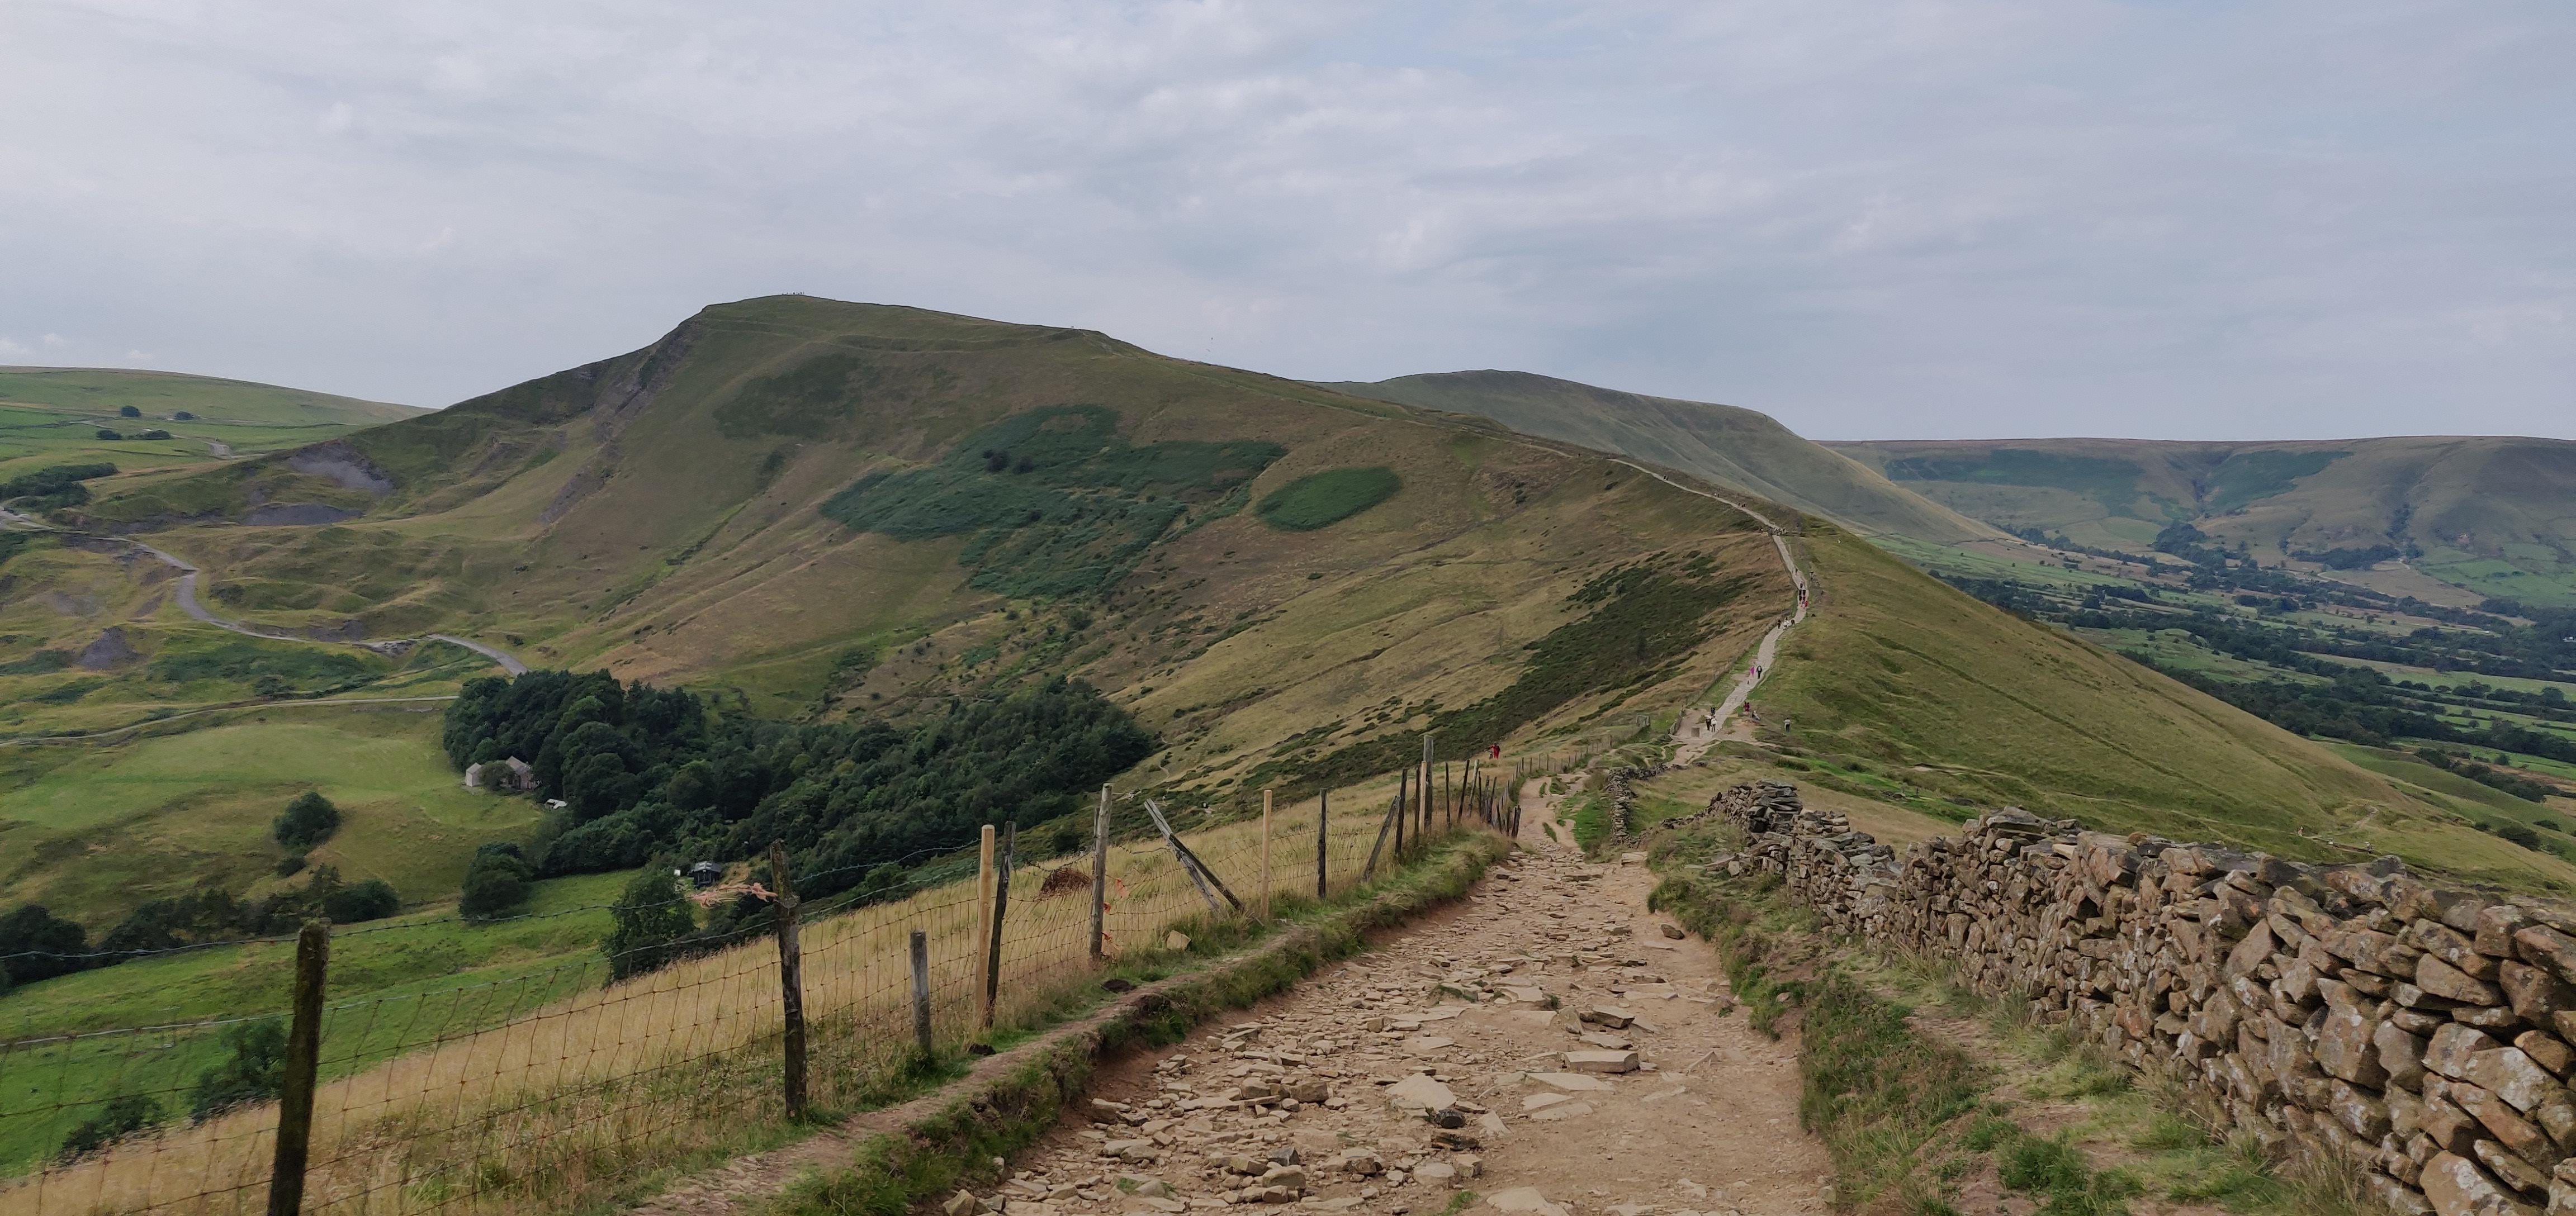 On The Great Ridge, Peak District looking towards Mam Tor